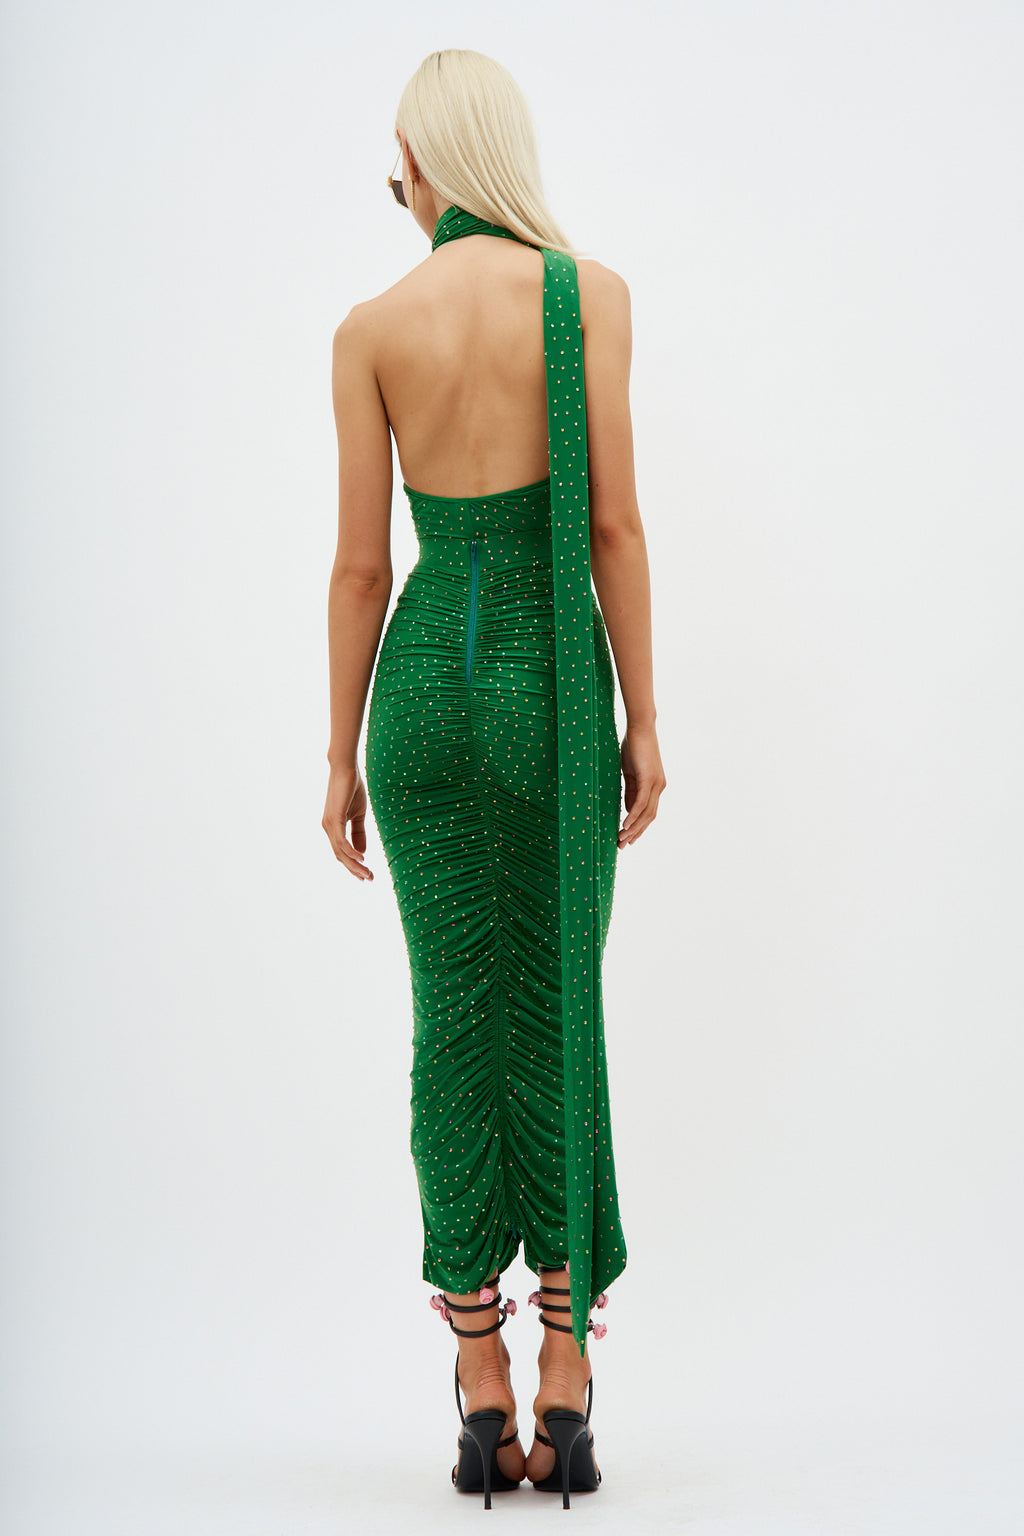 Scarf Wrap Crystal Jersey Emerald Bodysuit